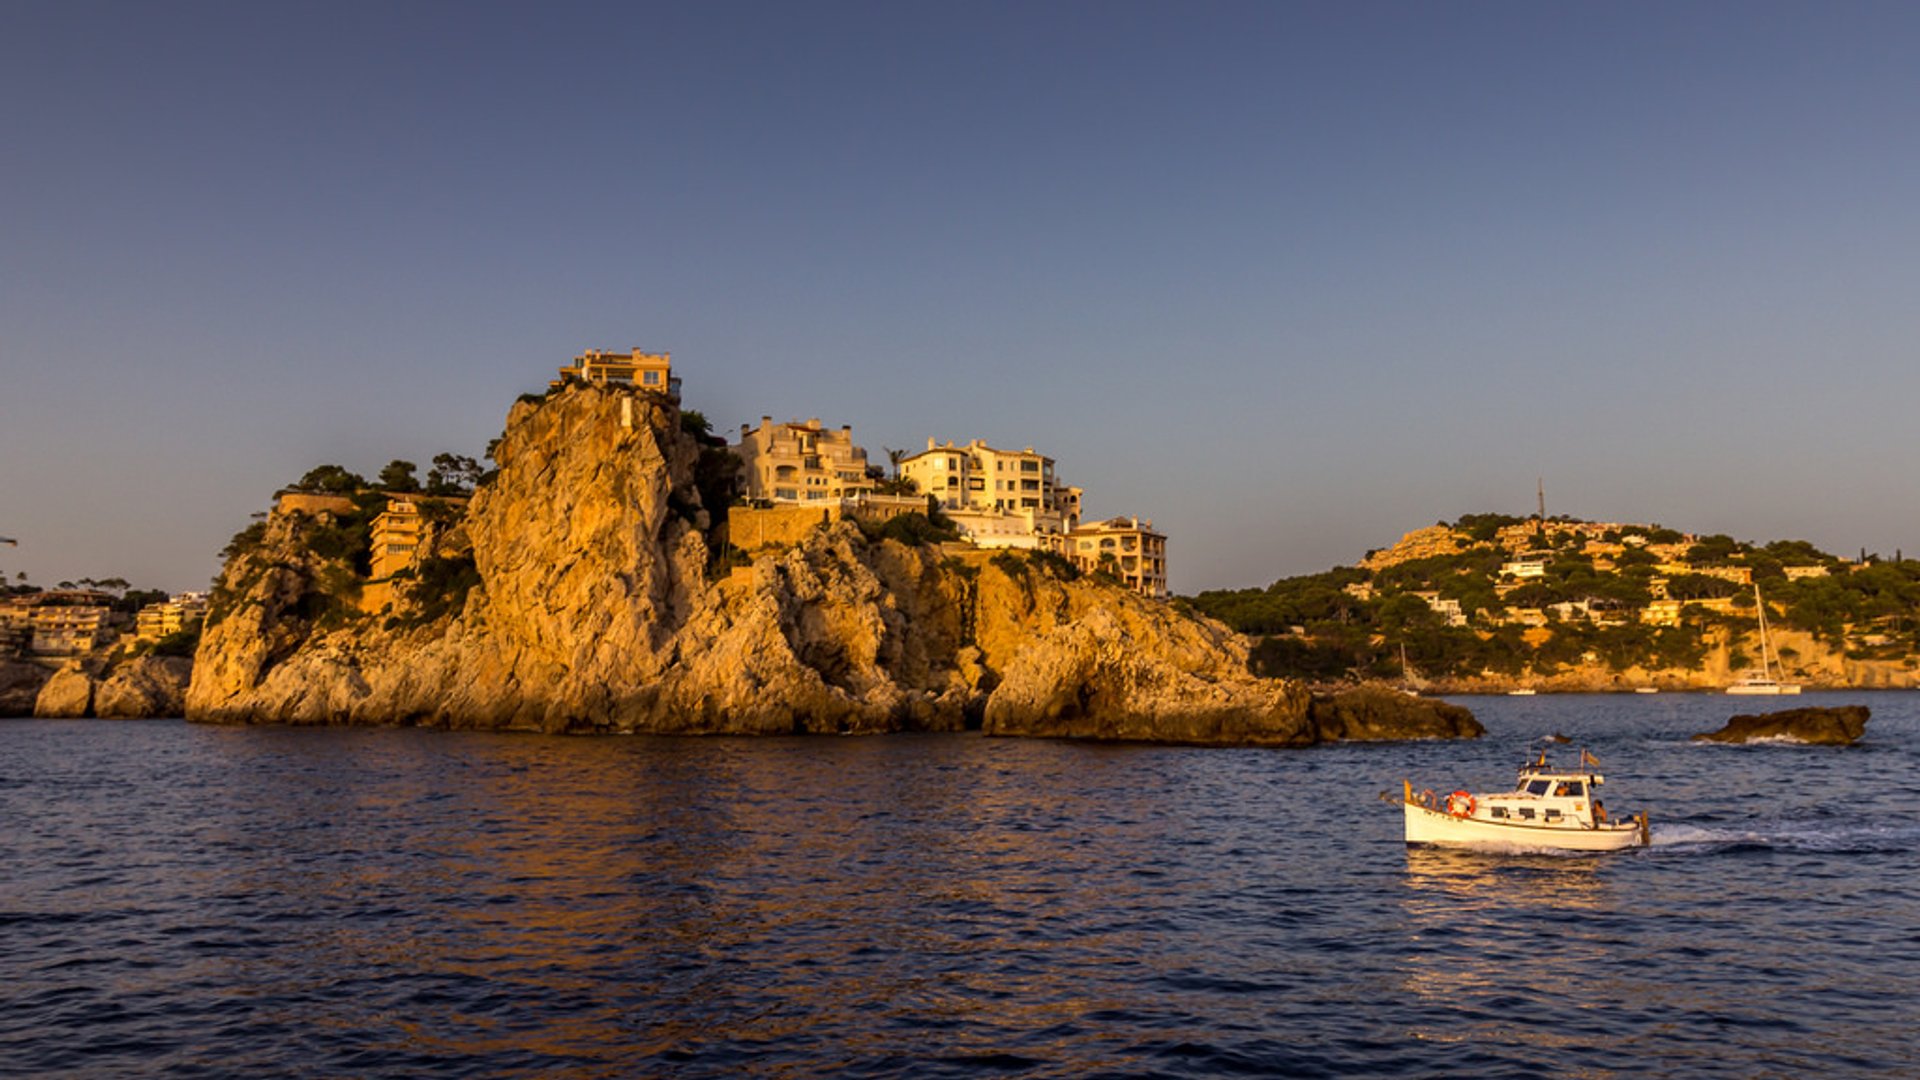 Boating and Yachting around Mallorca